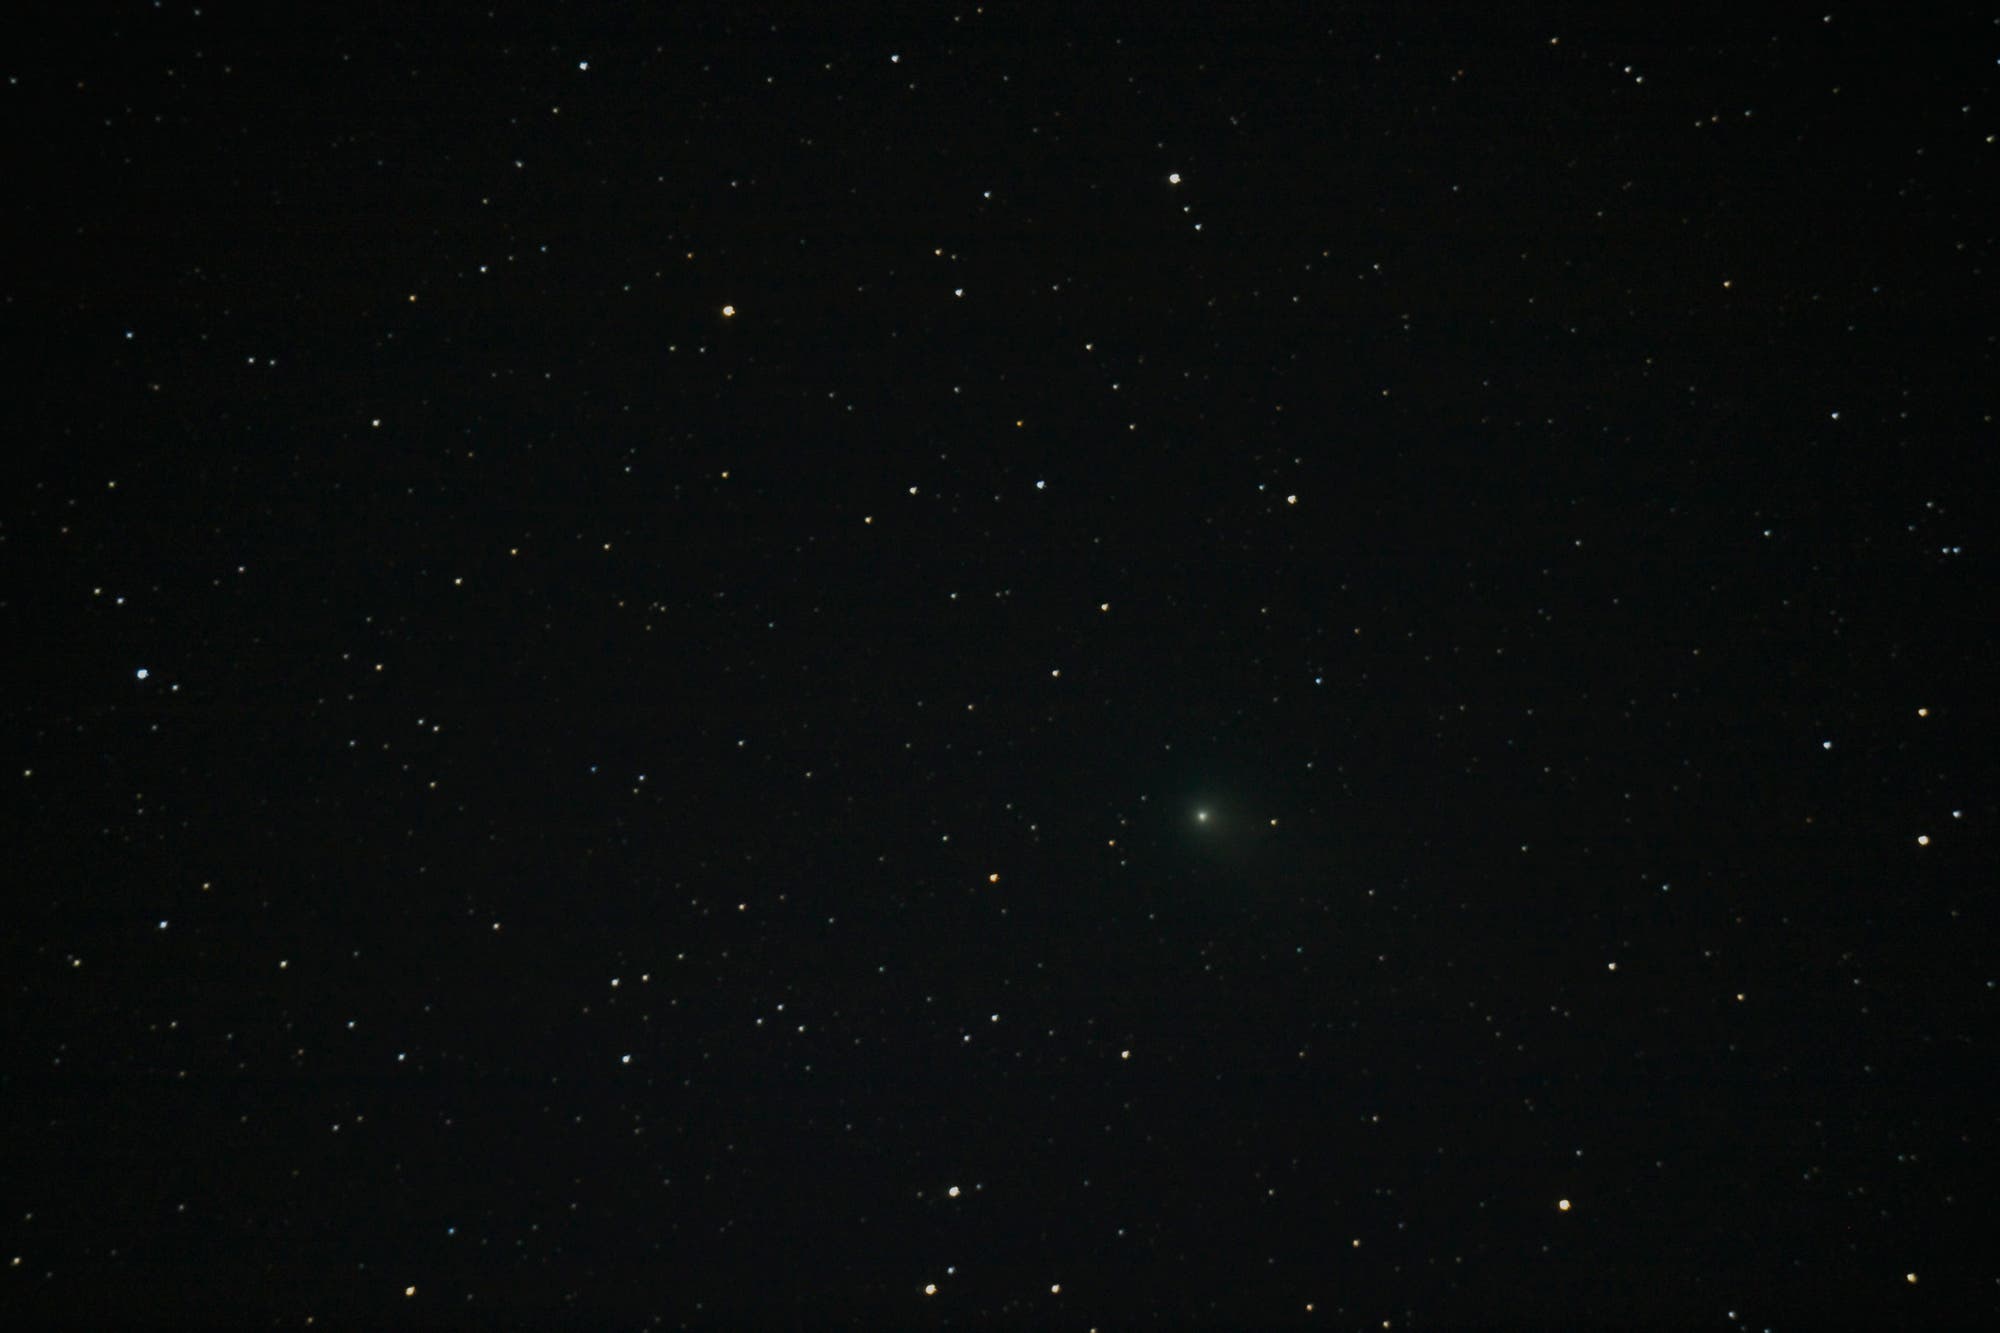 Komet C/2009 P1 Garradd am 2.8.2011